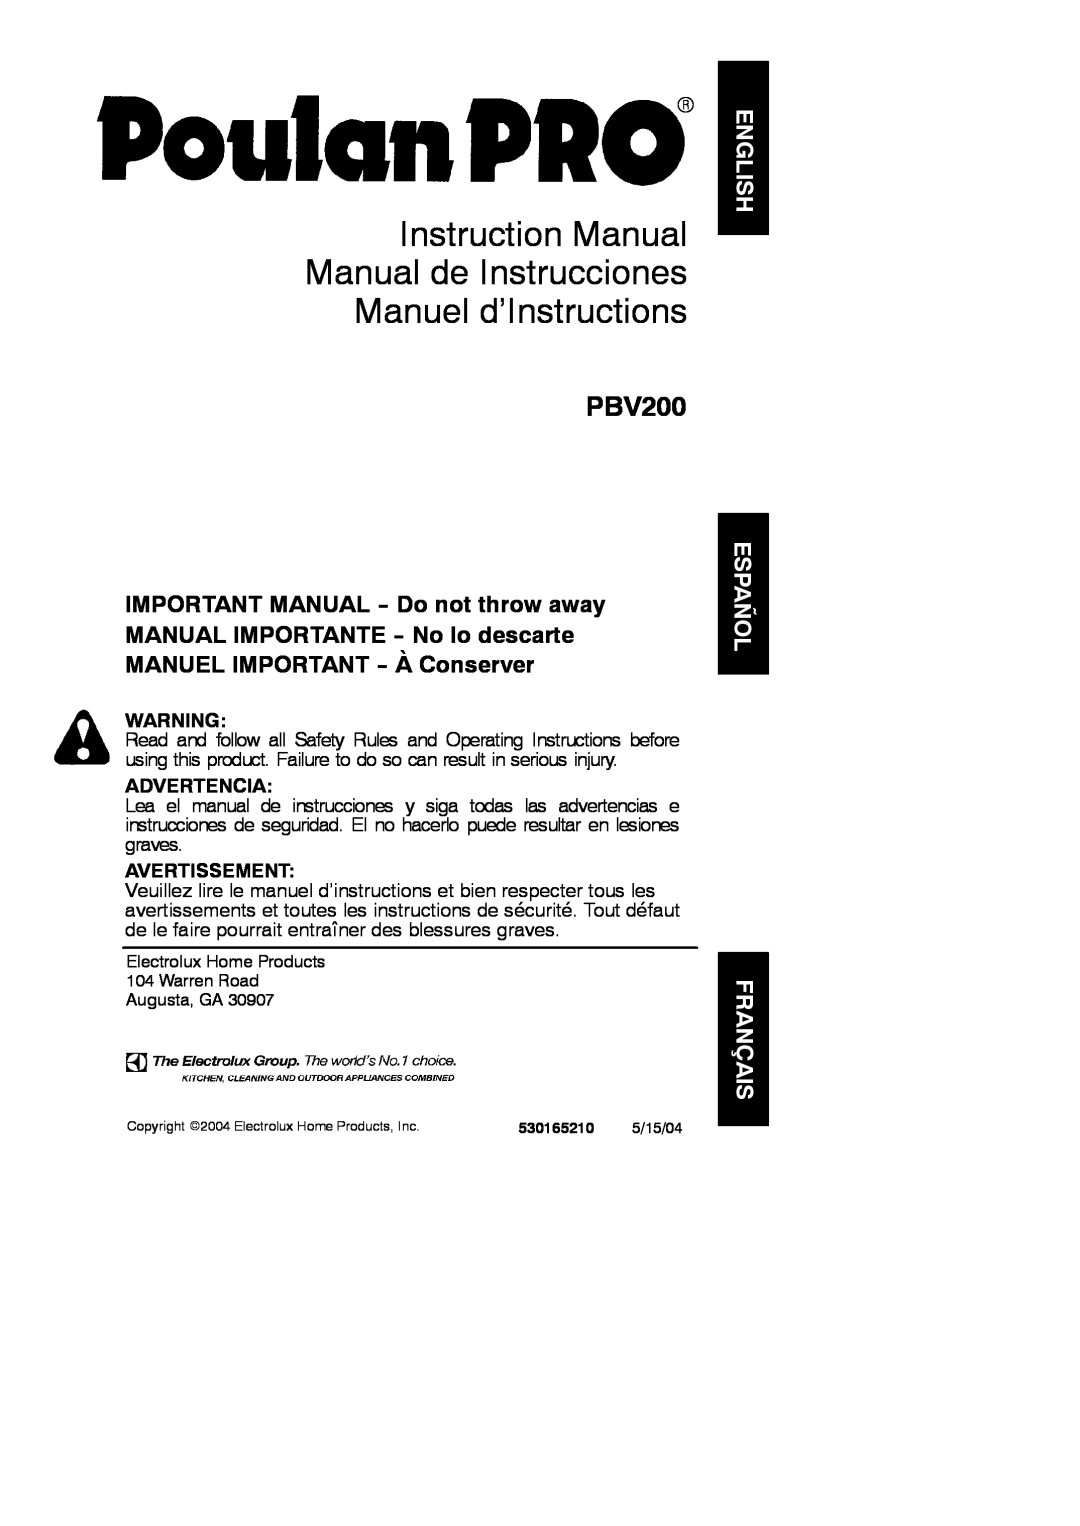 Poulan 530165210 instruction manual English, Español Français, PBV200, Advertencia, Avertissement 